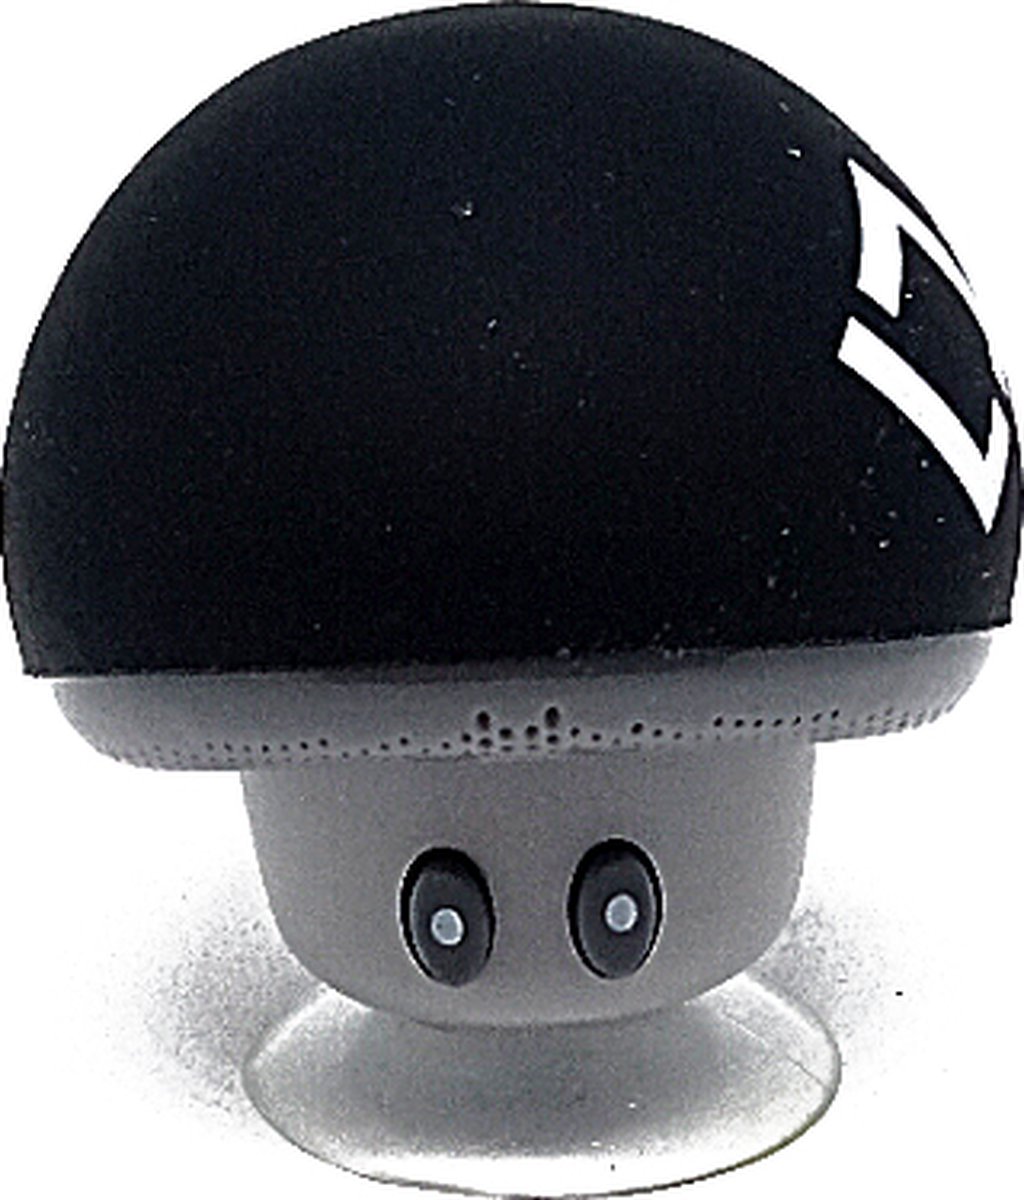 Liquno Icanto 2 Original Portable Mini Mushroom Bluetooth Speaker - Zwart